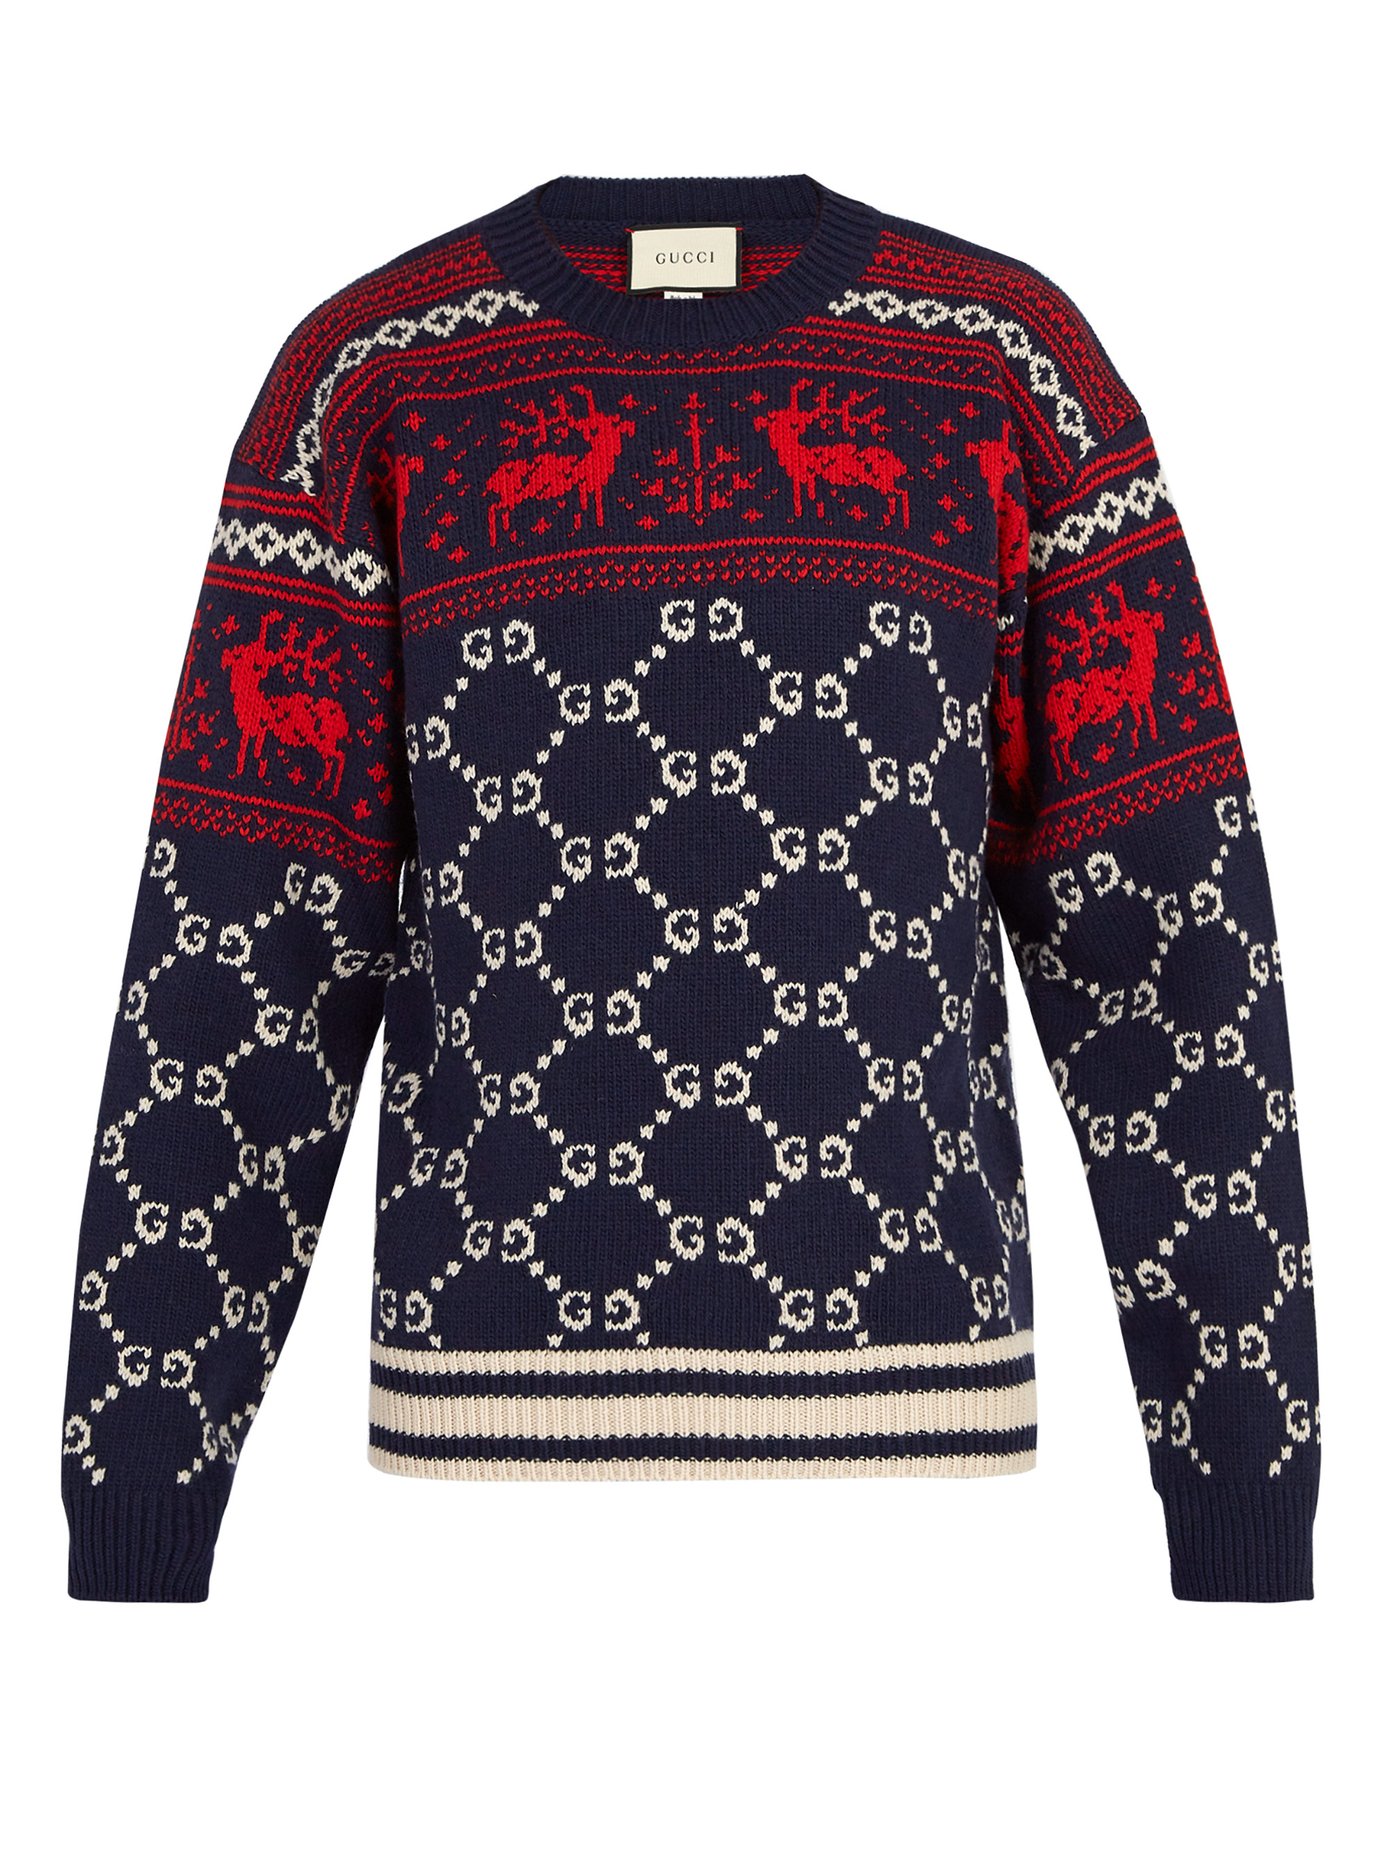 GG reindeer wool sweater | Gucci 